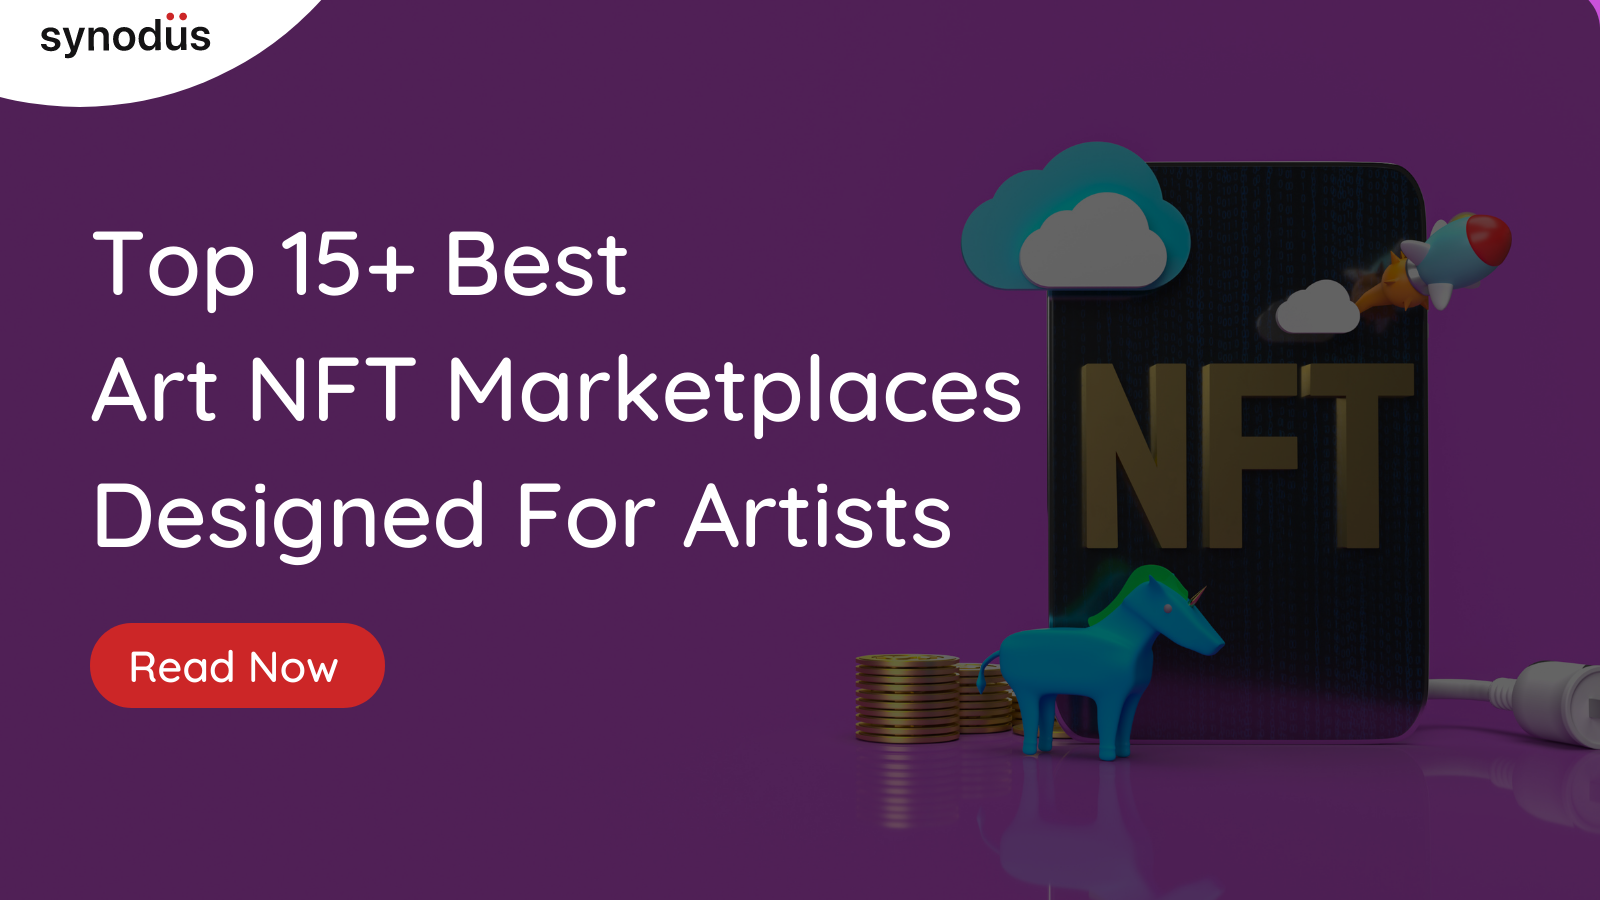 Top 15+ Best Art NFT Marketplaces Designed For Artists